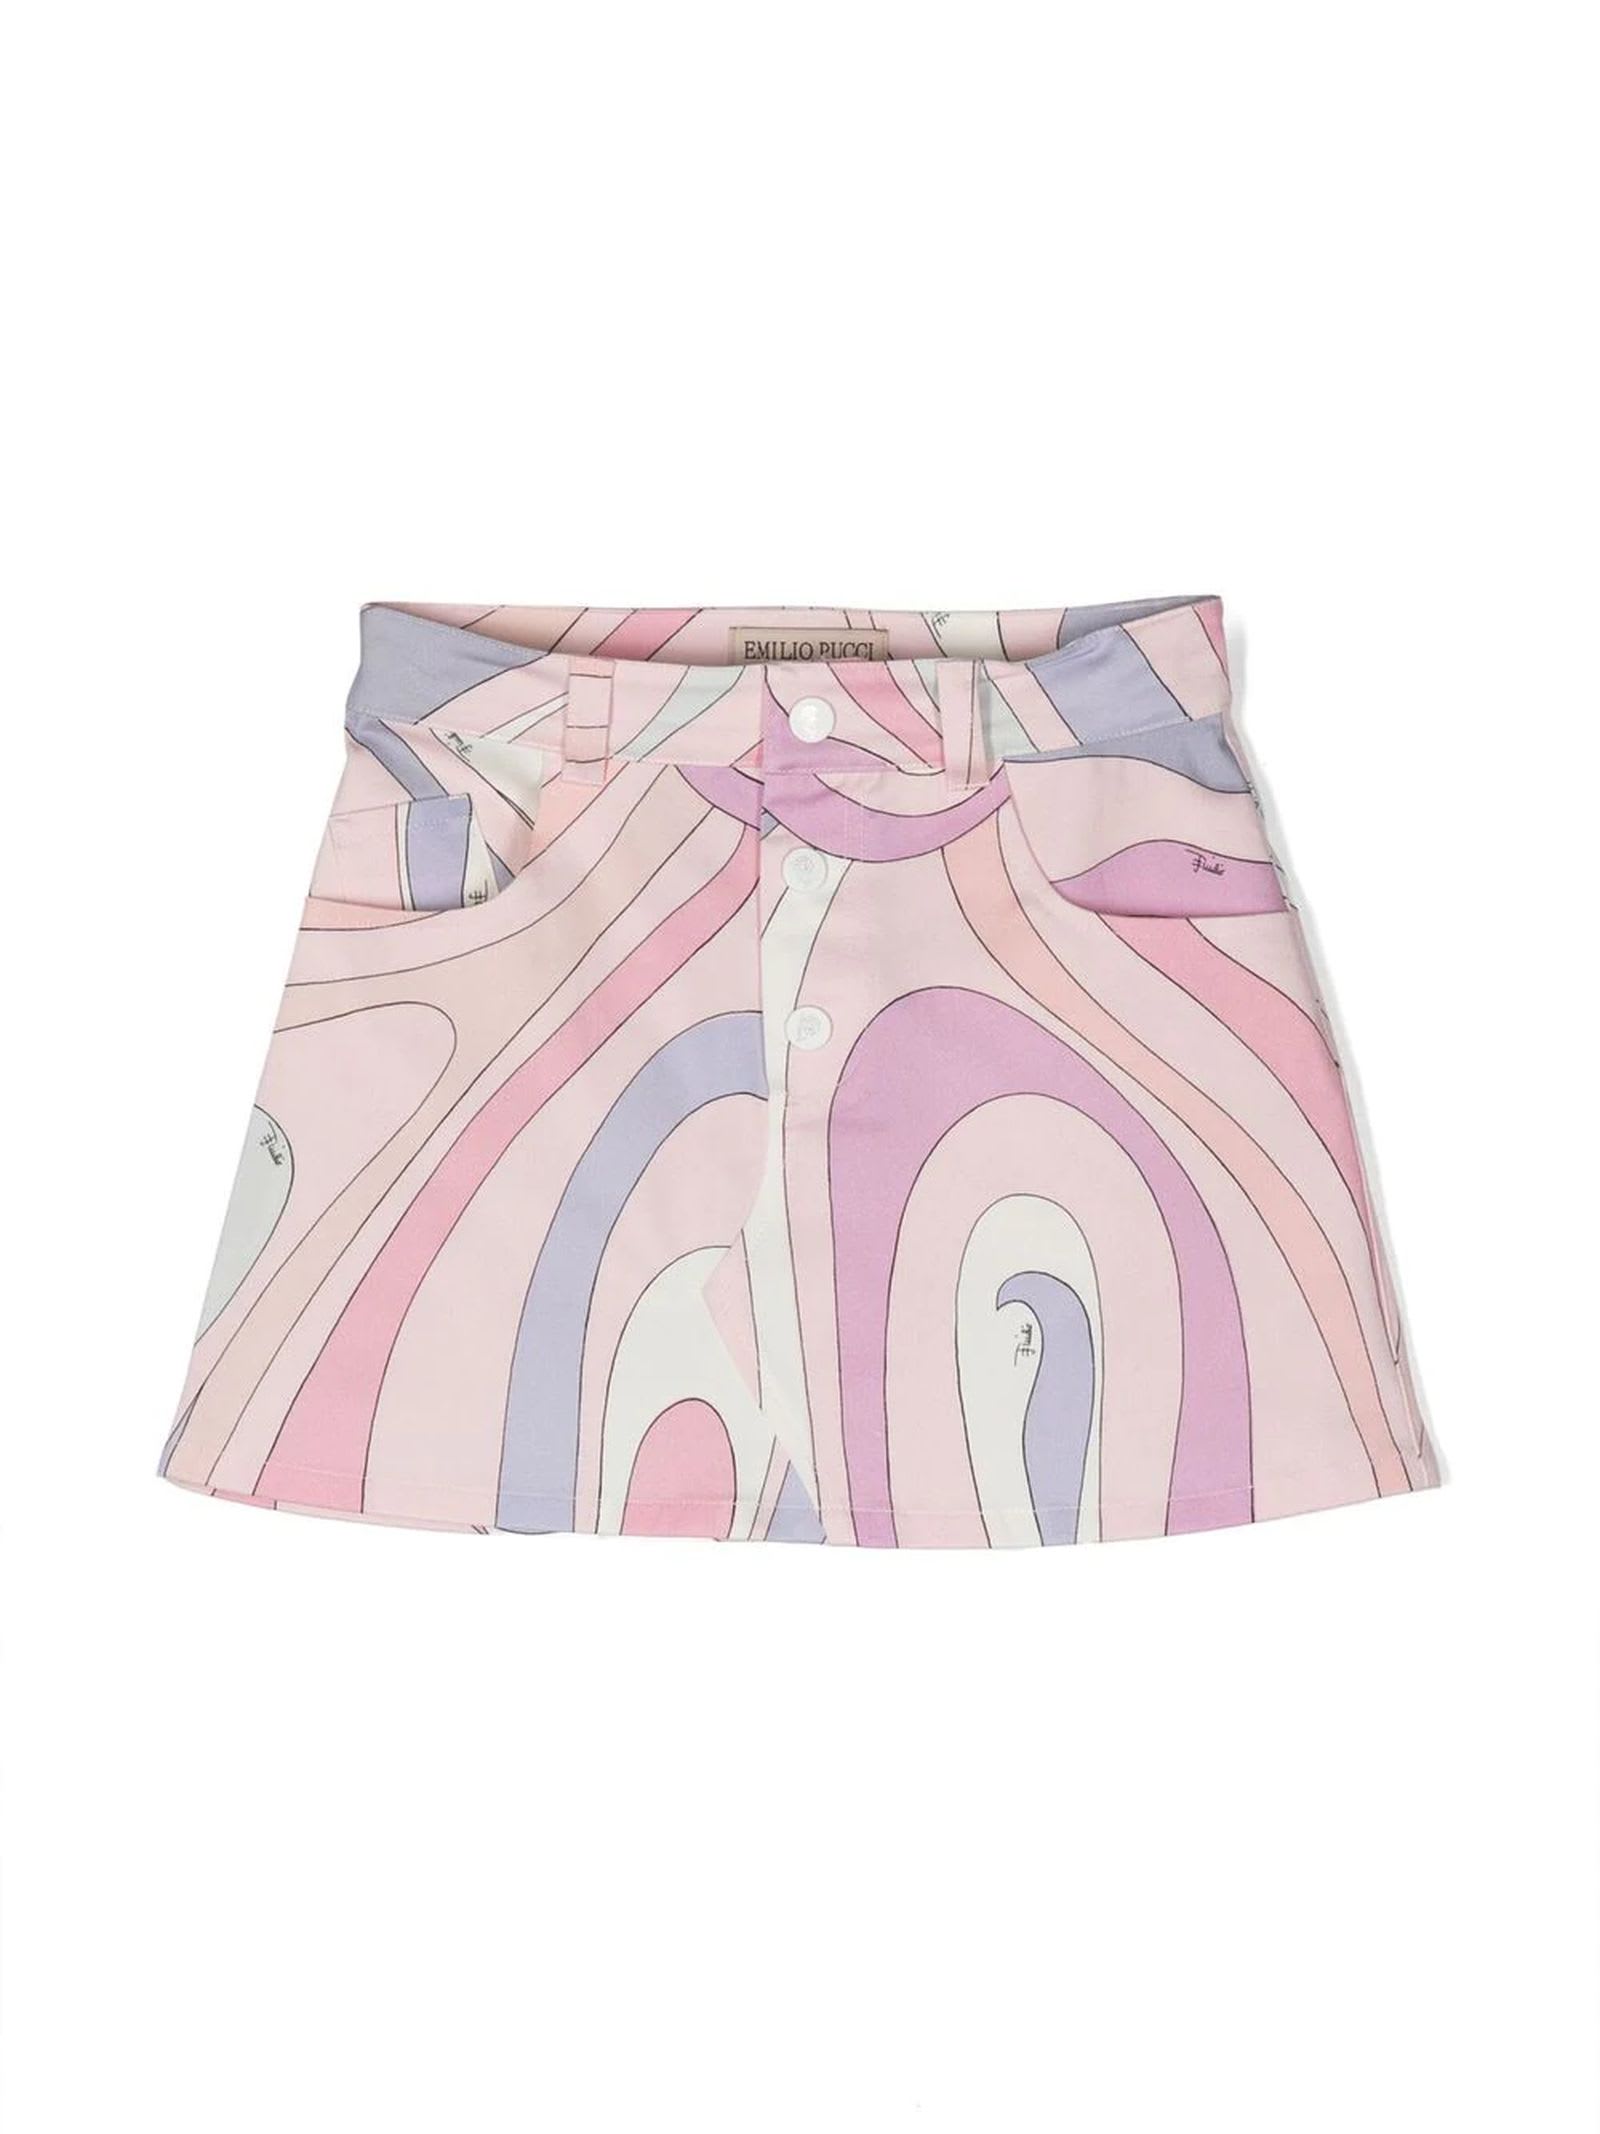 Emilio Pucci Pink Cotton Skirt